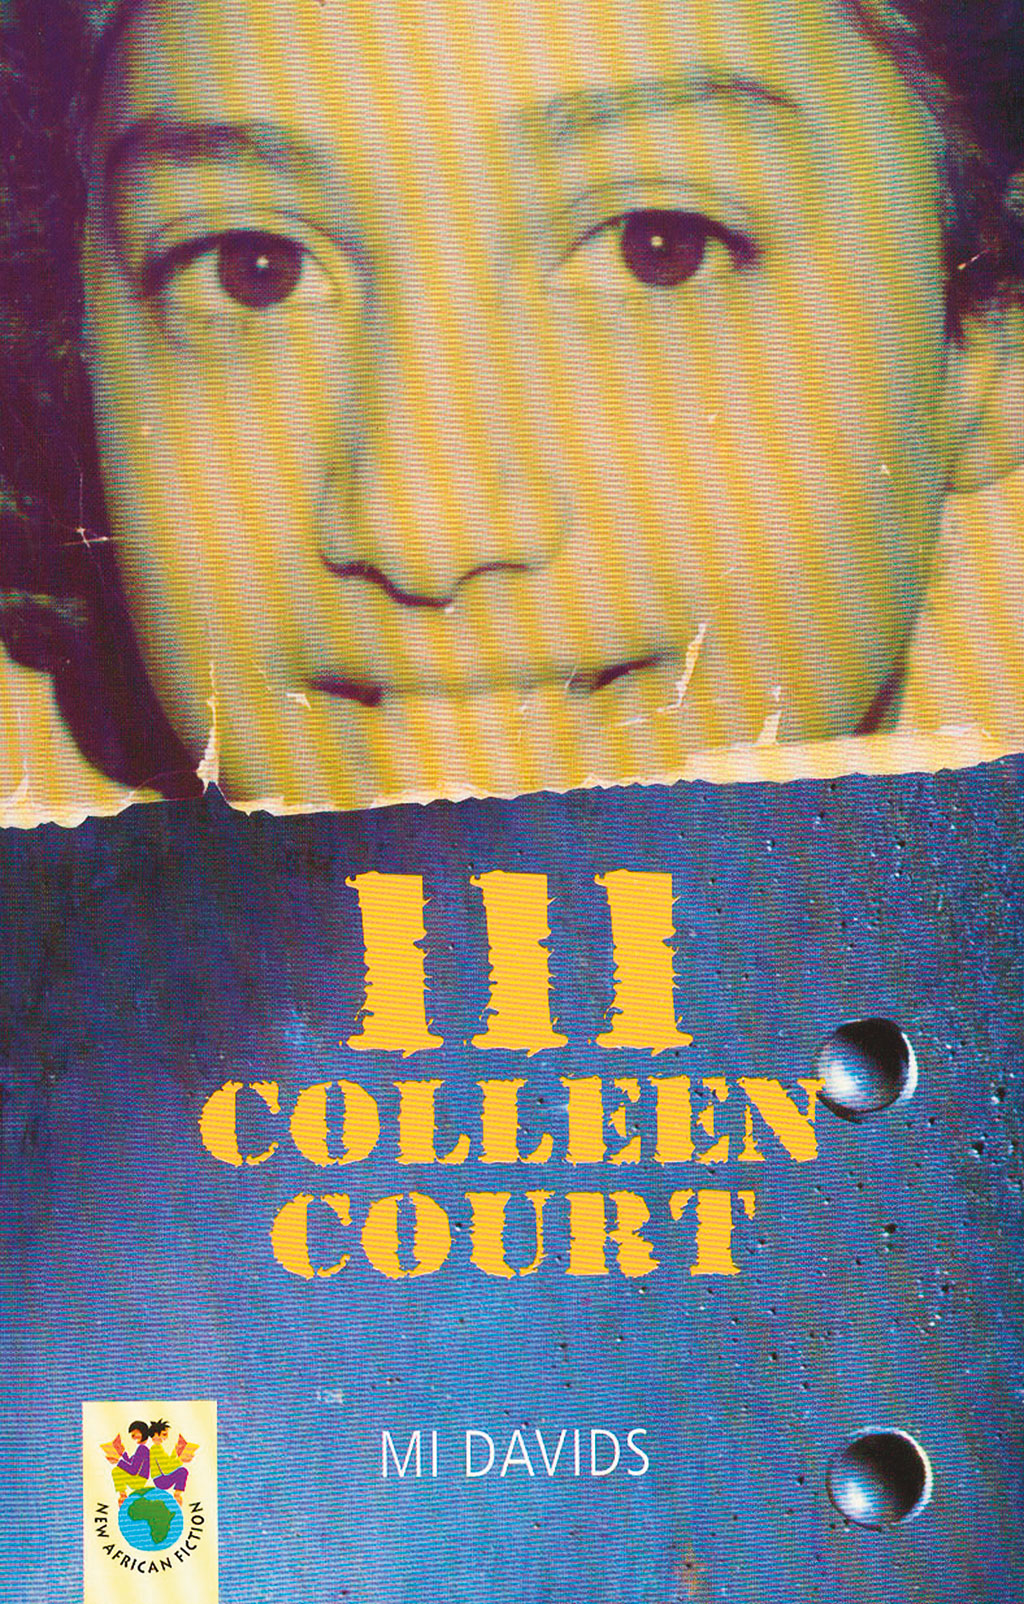 111 COLLEEN COURT